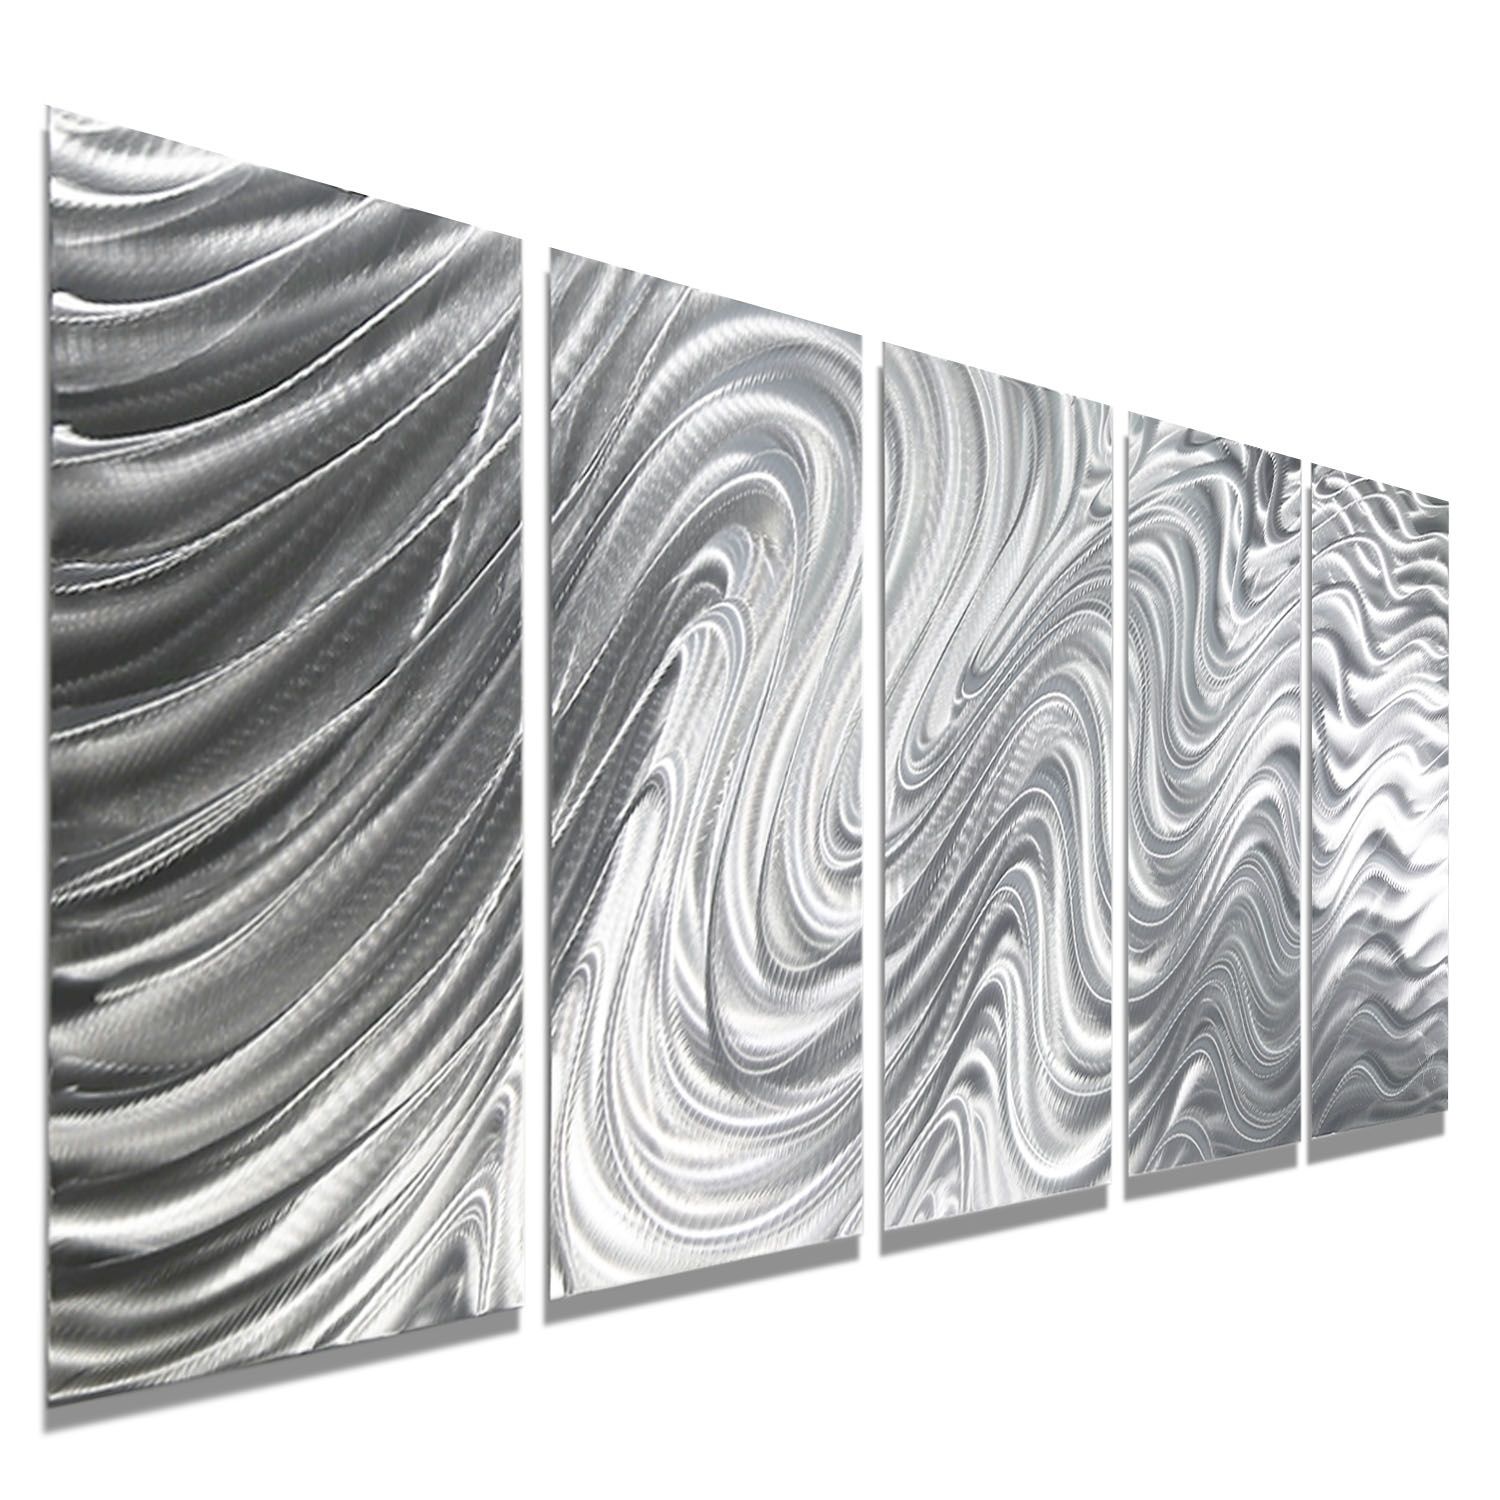 Mirage – Silver Metal Wall Art – 5 Panel Wall Décorjon Allen Pertaining To Silver Metal Wall Art (View 18 of 20)